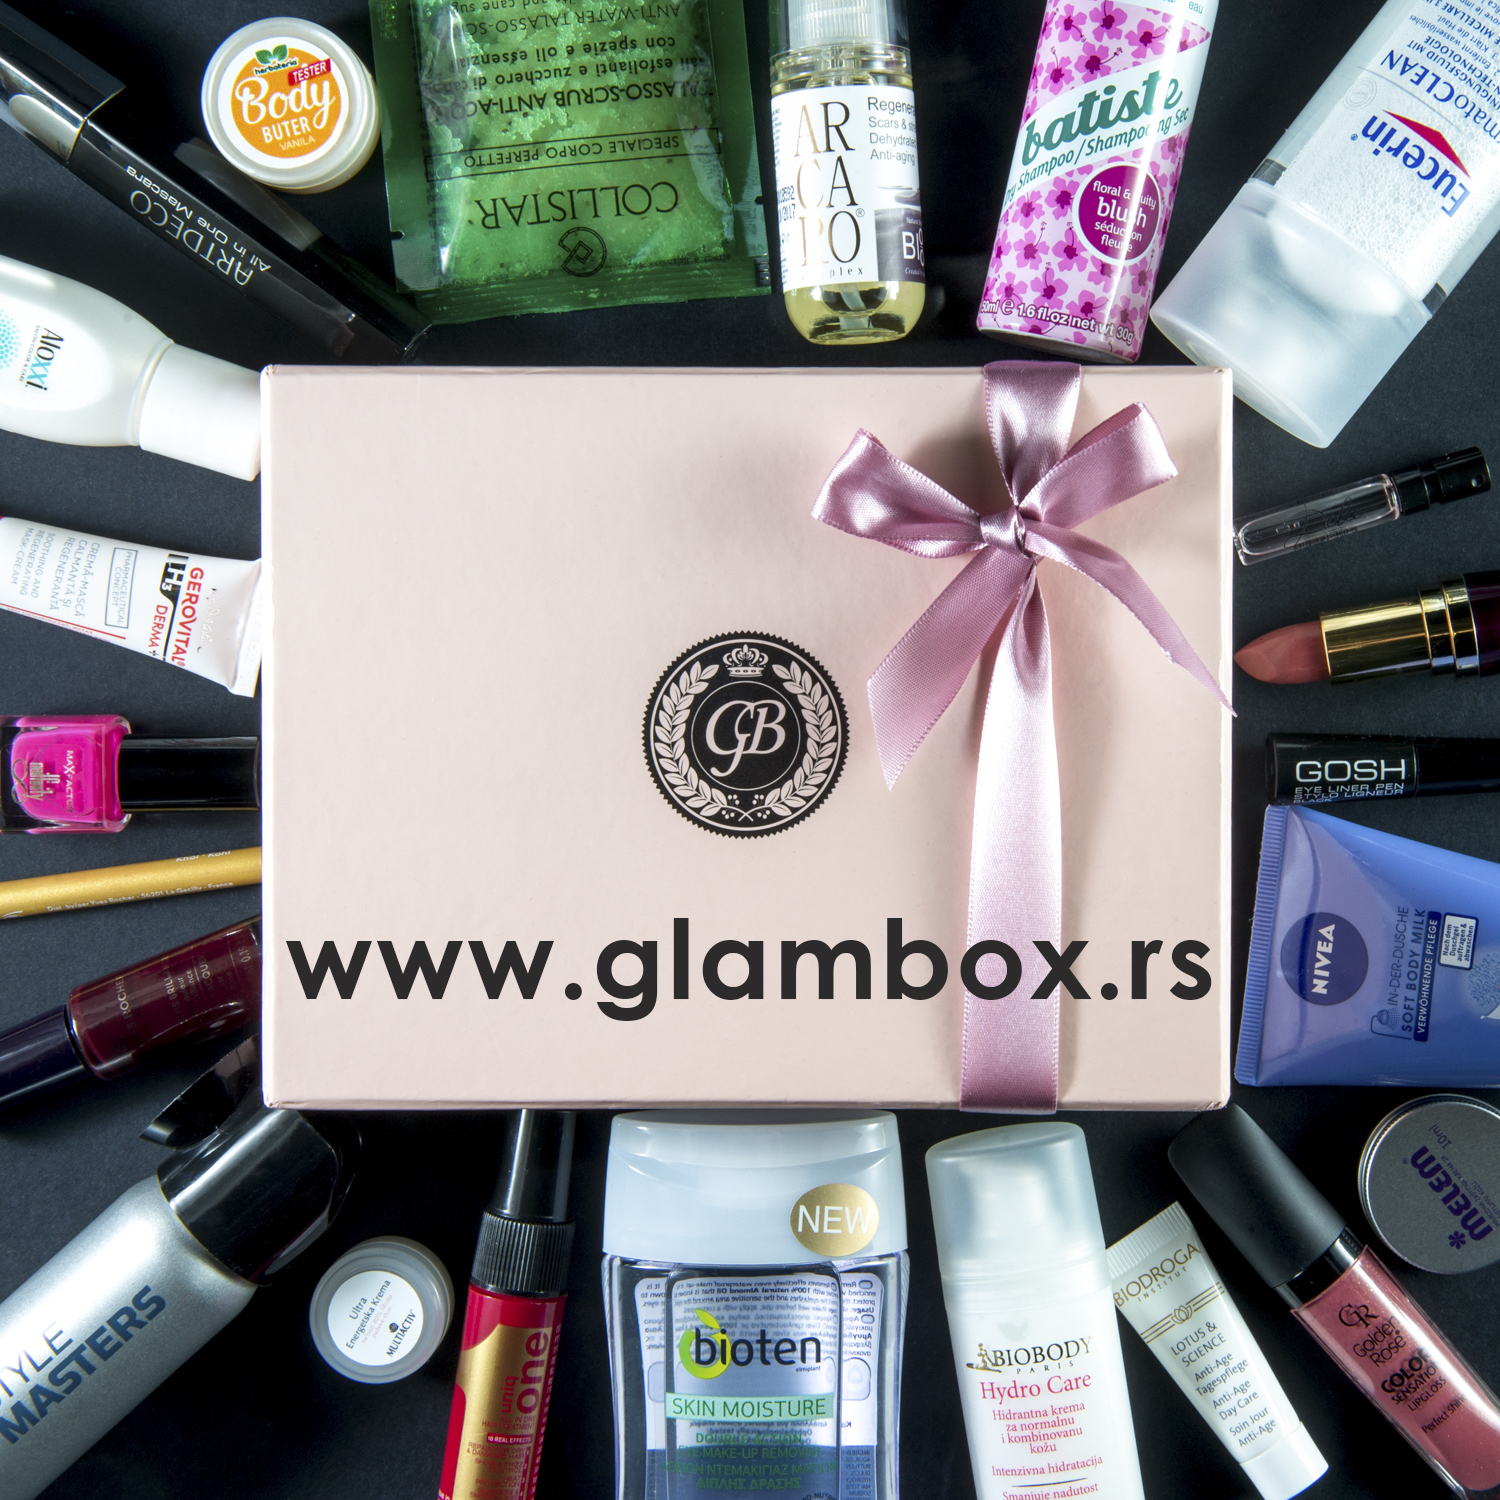 Glam box 2